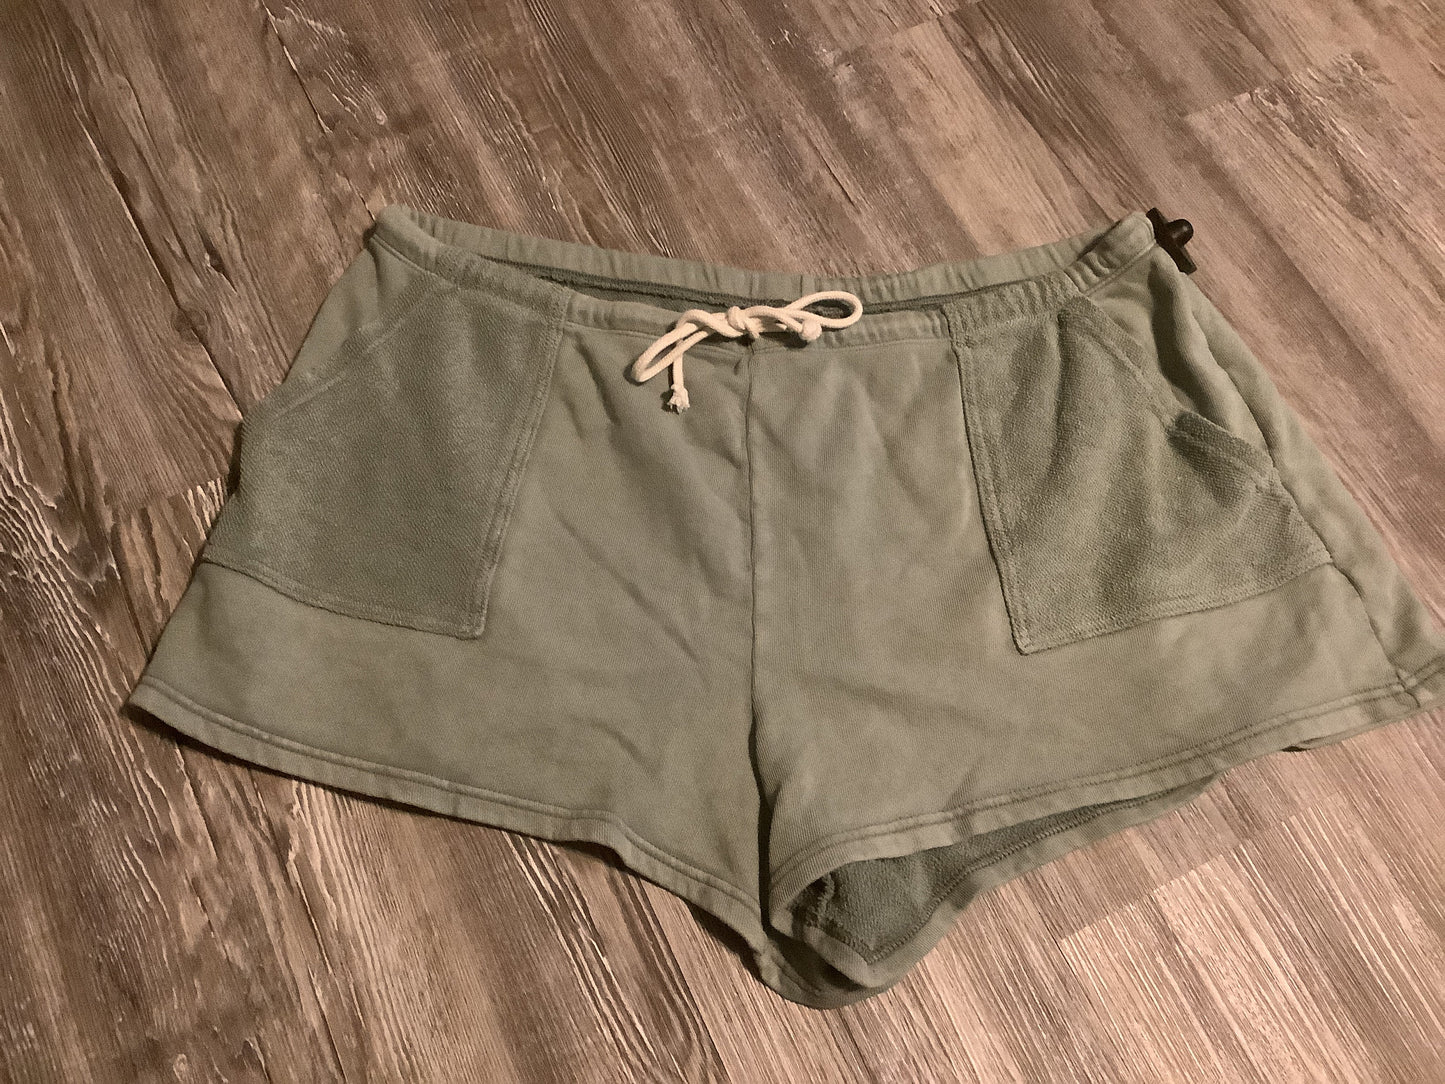 Green Shorts Aerie, Size Xxl